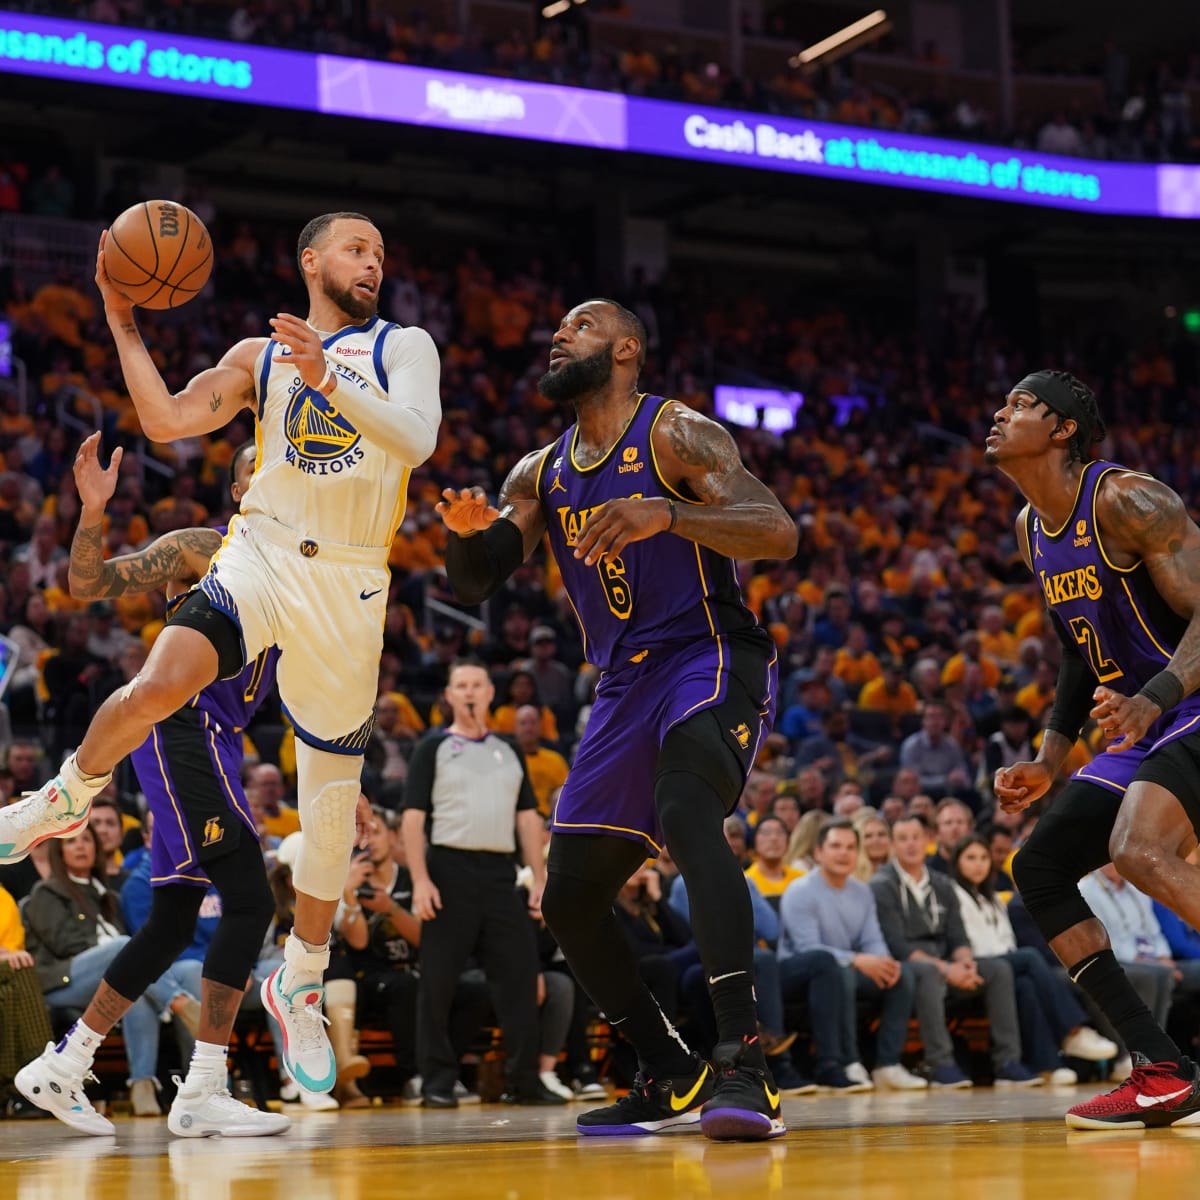 Photos: Warriors open NBA title defense against Lakers